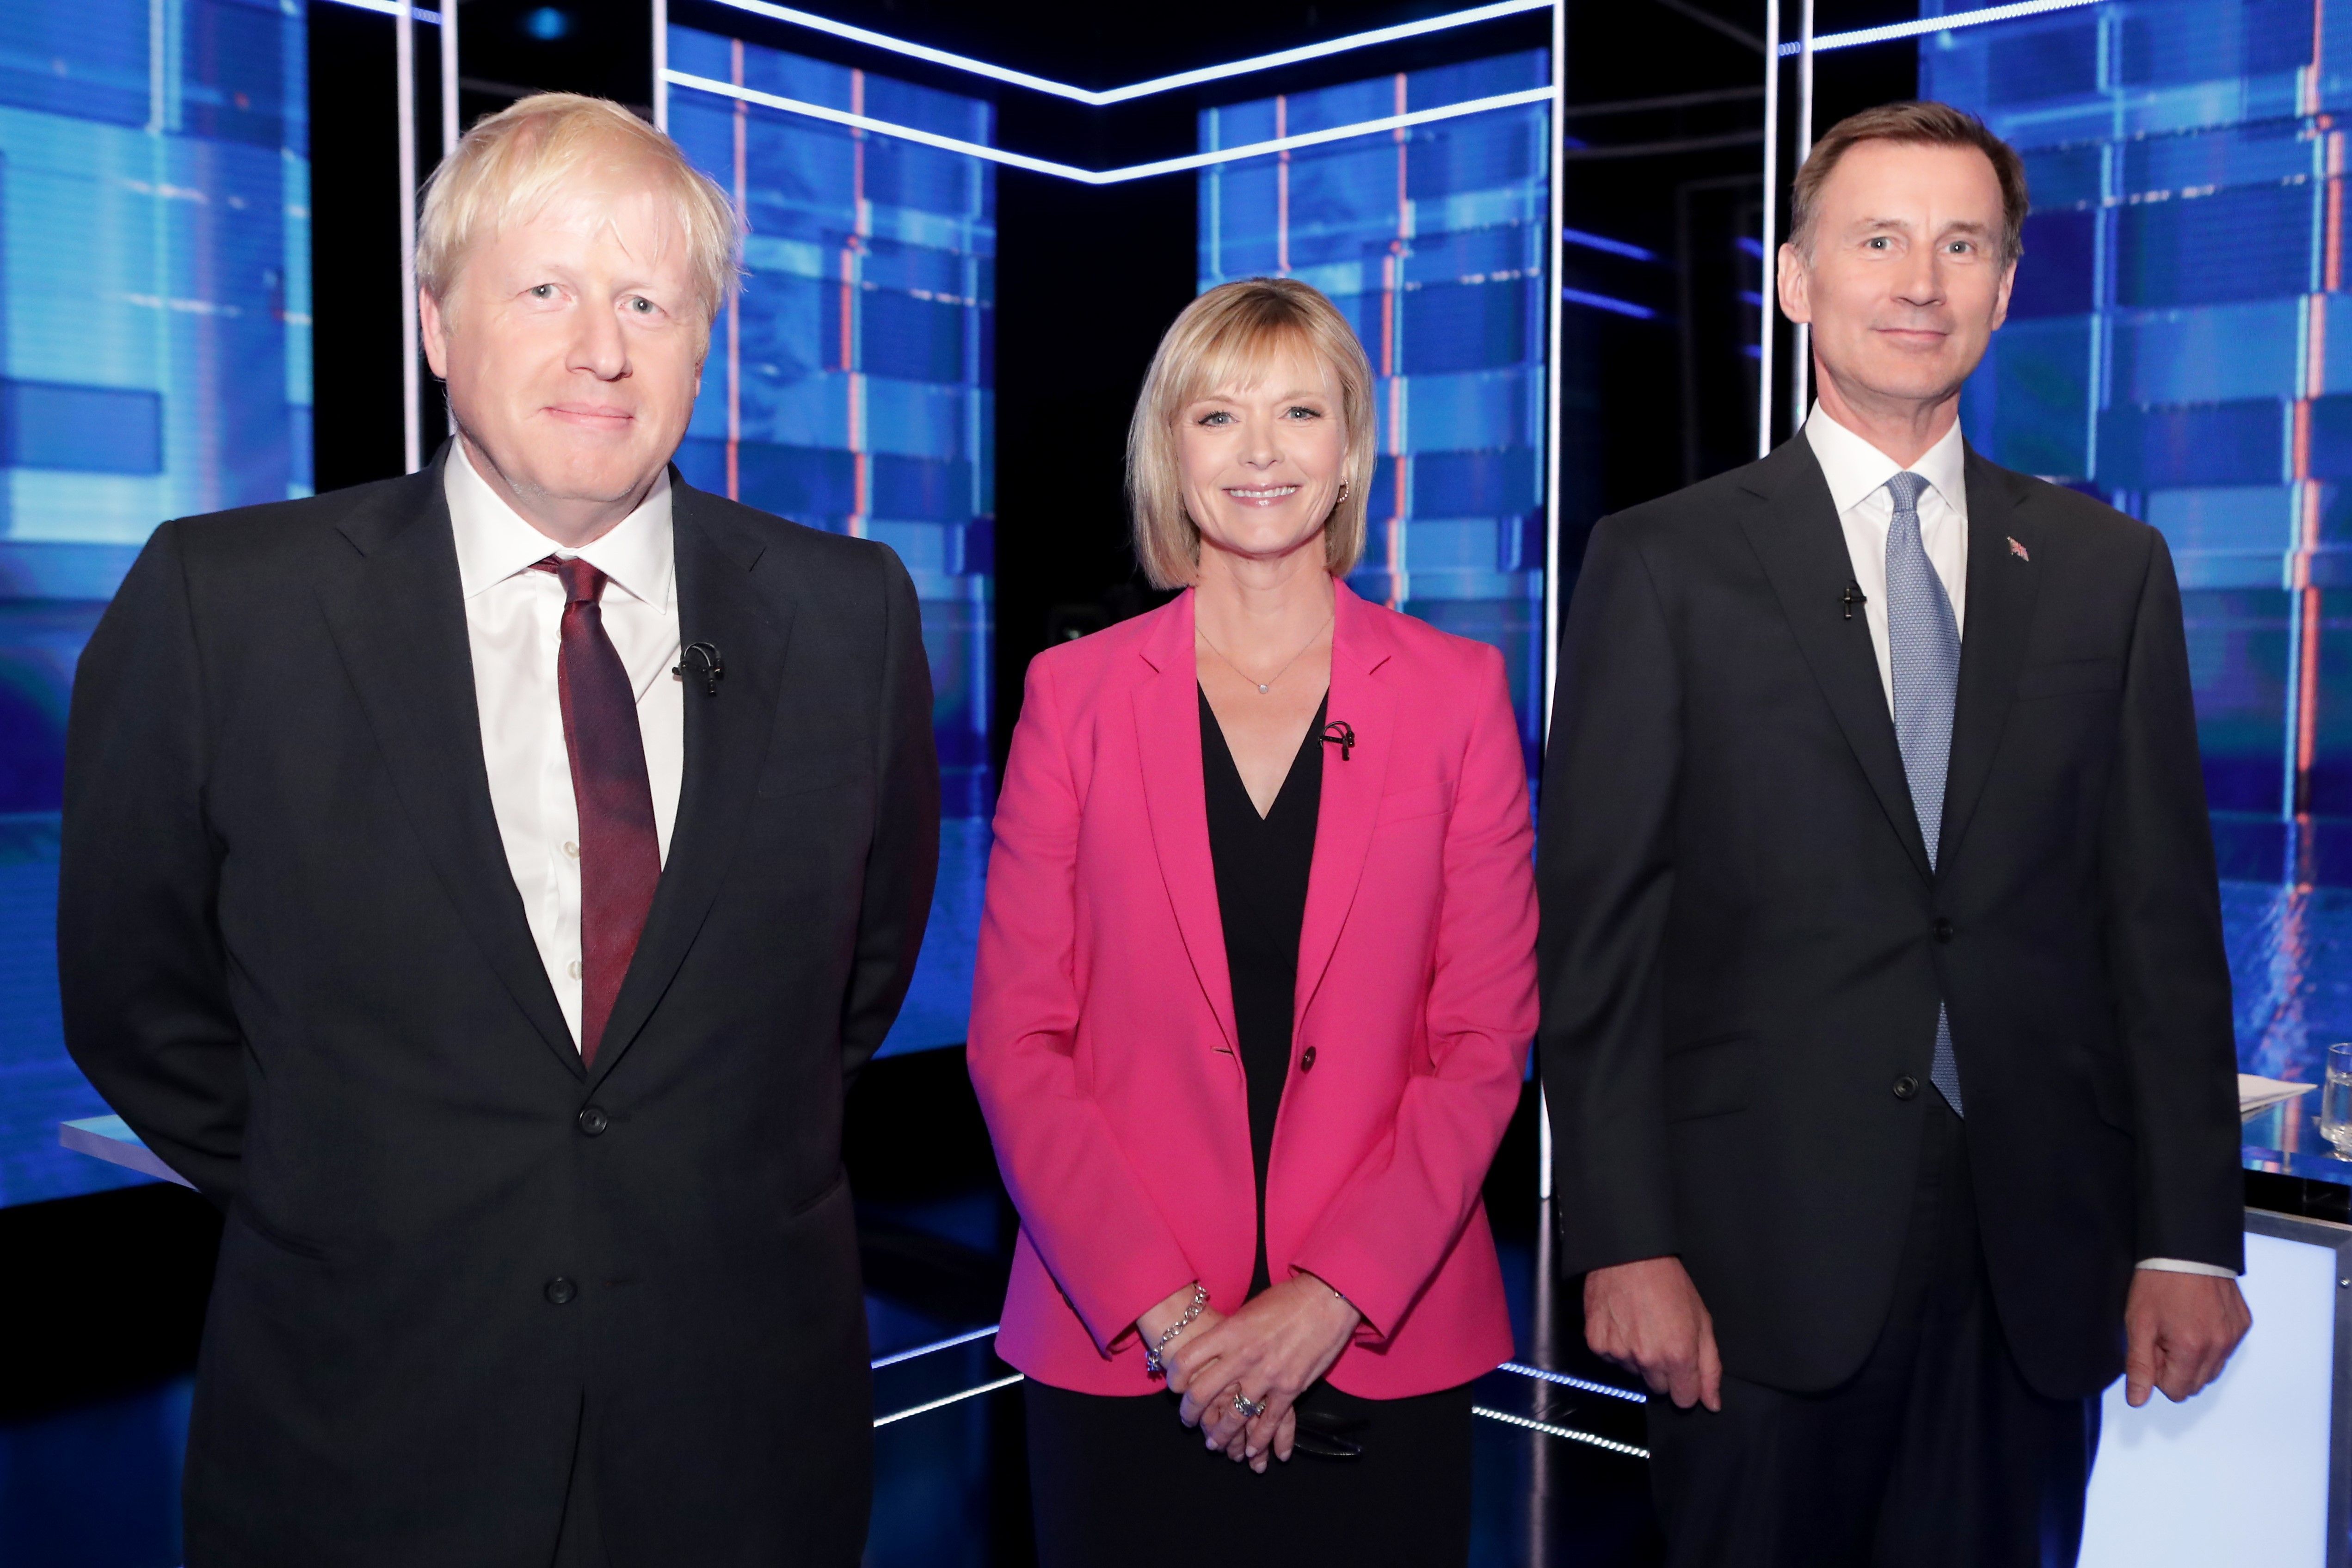 Boris Johnson, left, with moderator Julie Etchingham, centre, and Boris Johnson